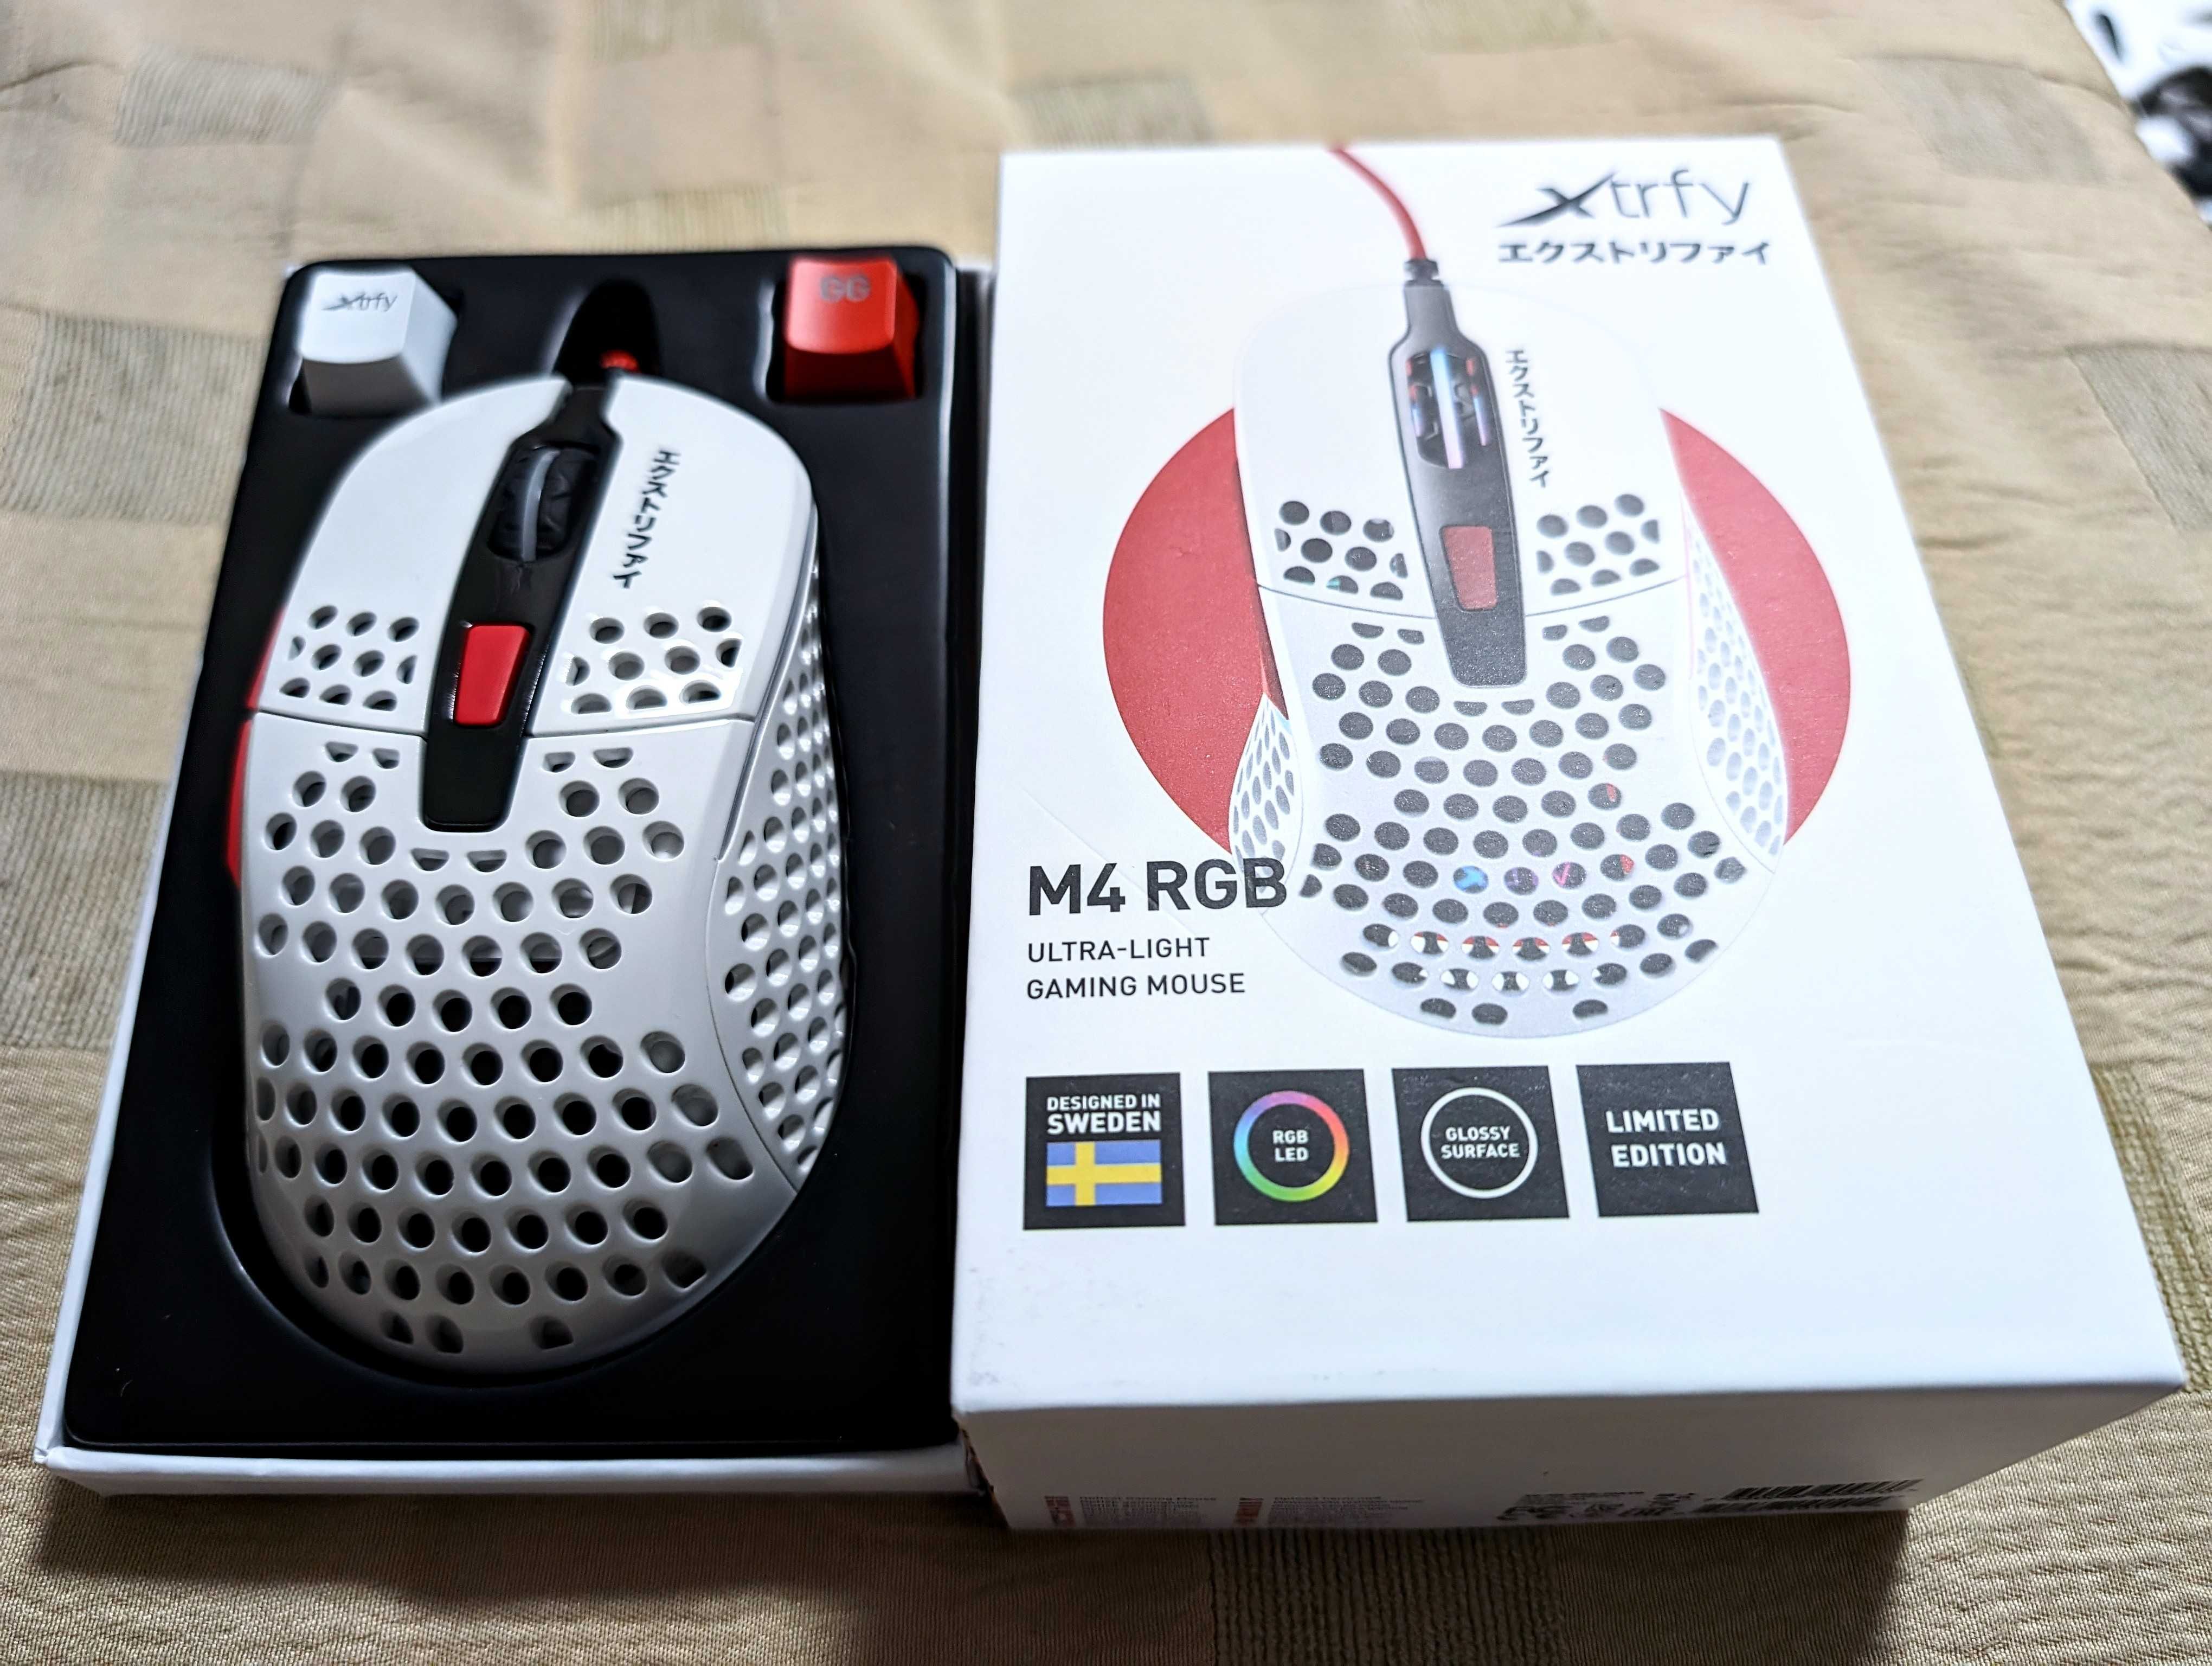 Комп'ютерна миша Xtrfy M4 RGB tokyo Limited Edition мишка